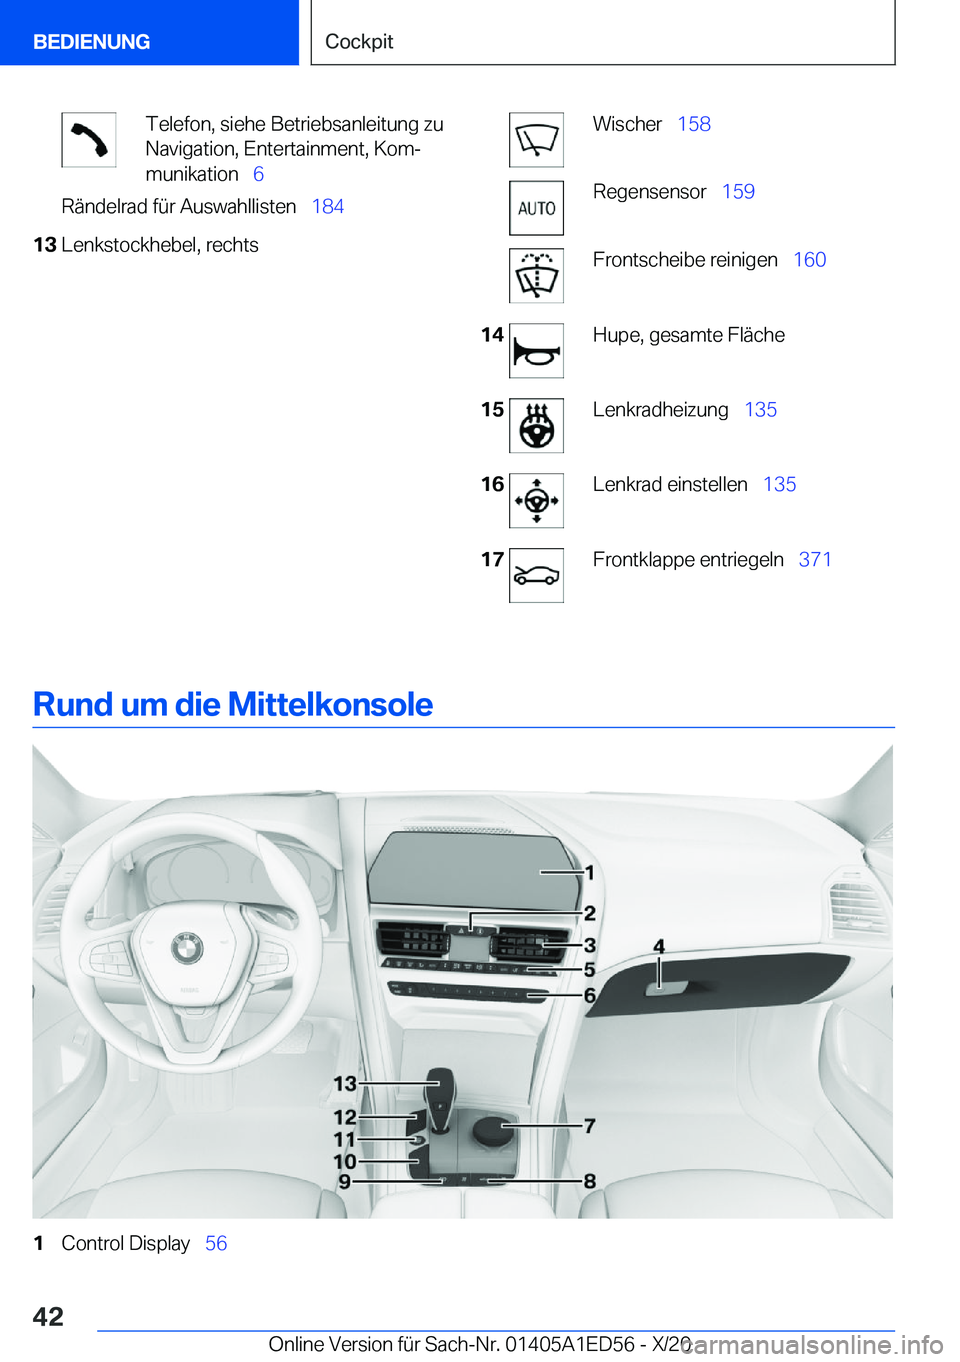 BMW 8 SERIES CONVERTIBLE 2021  Betriebsanleitungen (in German) �T�e�l�e�f�o�n�,��s�i�e�h�e��B�e�t�r�i�e�b�s�a�n�l�e�i�t�u�n�g��z�u
�N�a�v�i�g�a�t�i�o�n�,��E�n�t�e�r�t�a�i�n�m�e�n�t�,��K�o�mj
�m�u�n�i�k�a�t�i�o�n\_ �6�R�